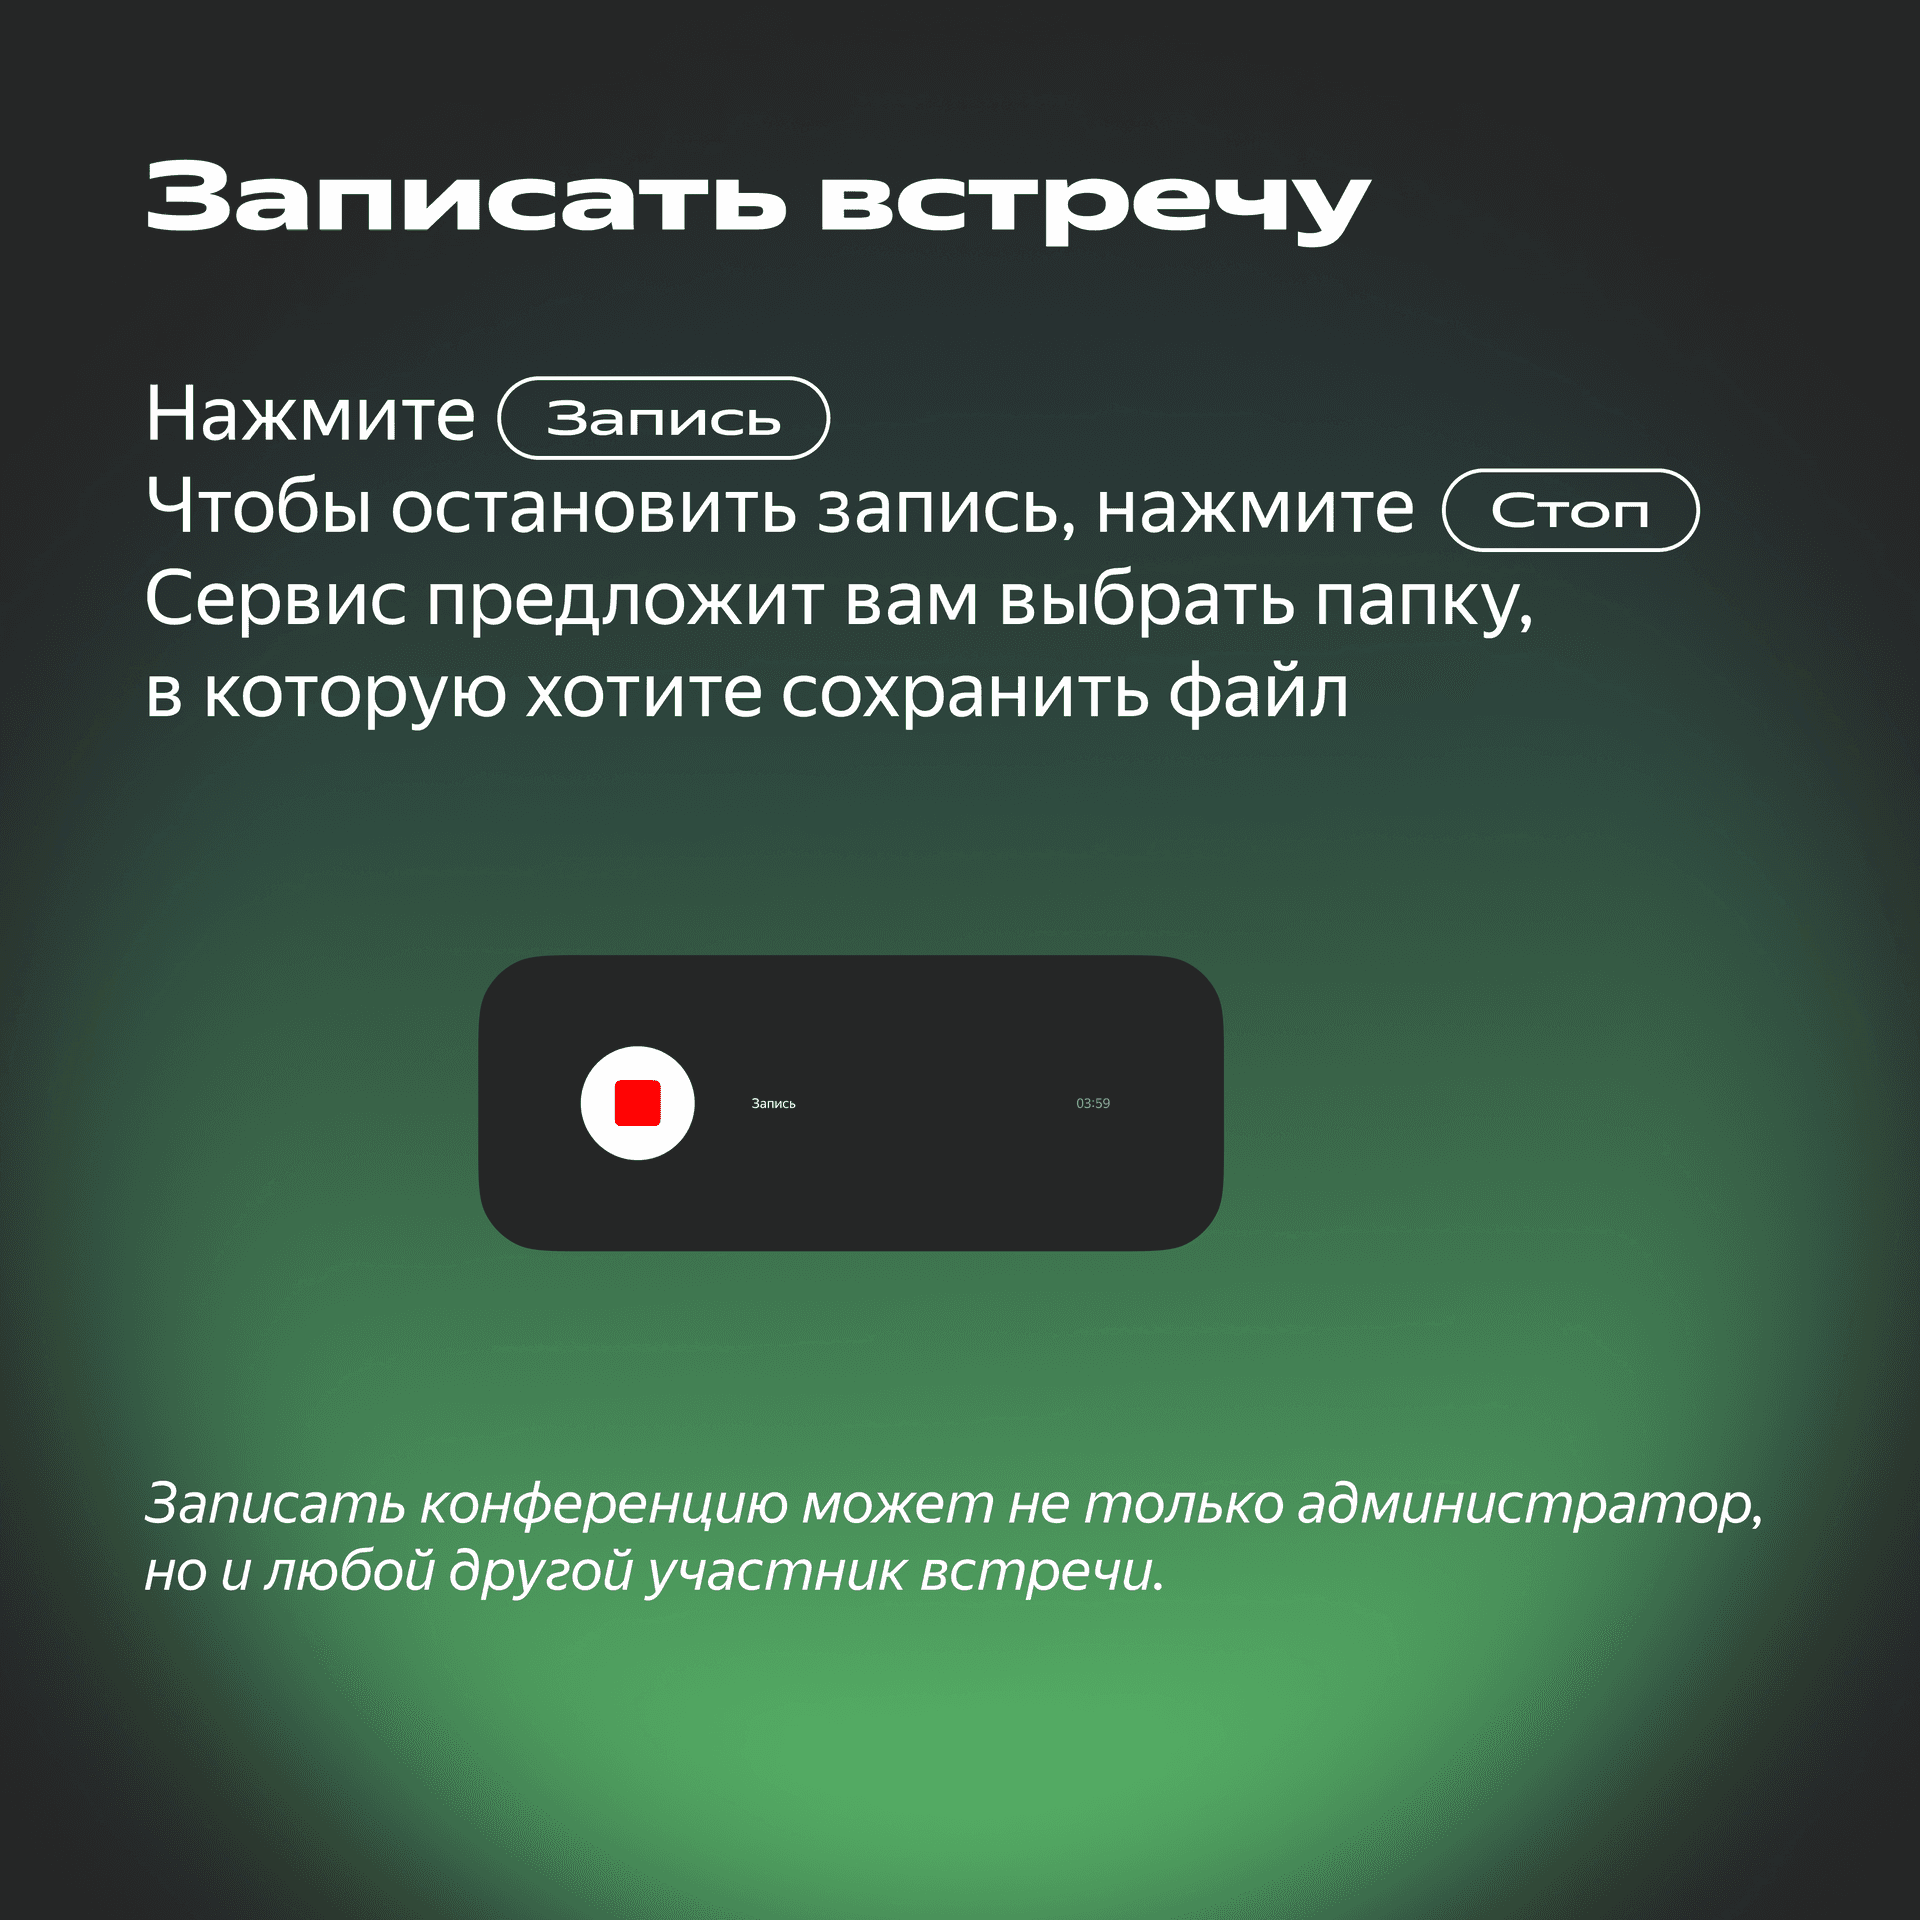 видеовстречи_телемост_набор_3_карточка_5